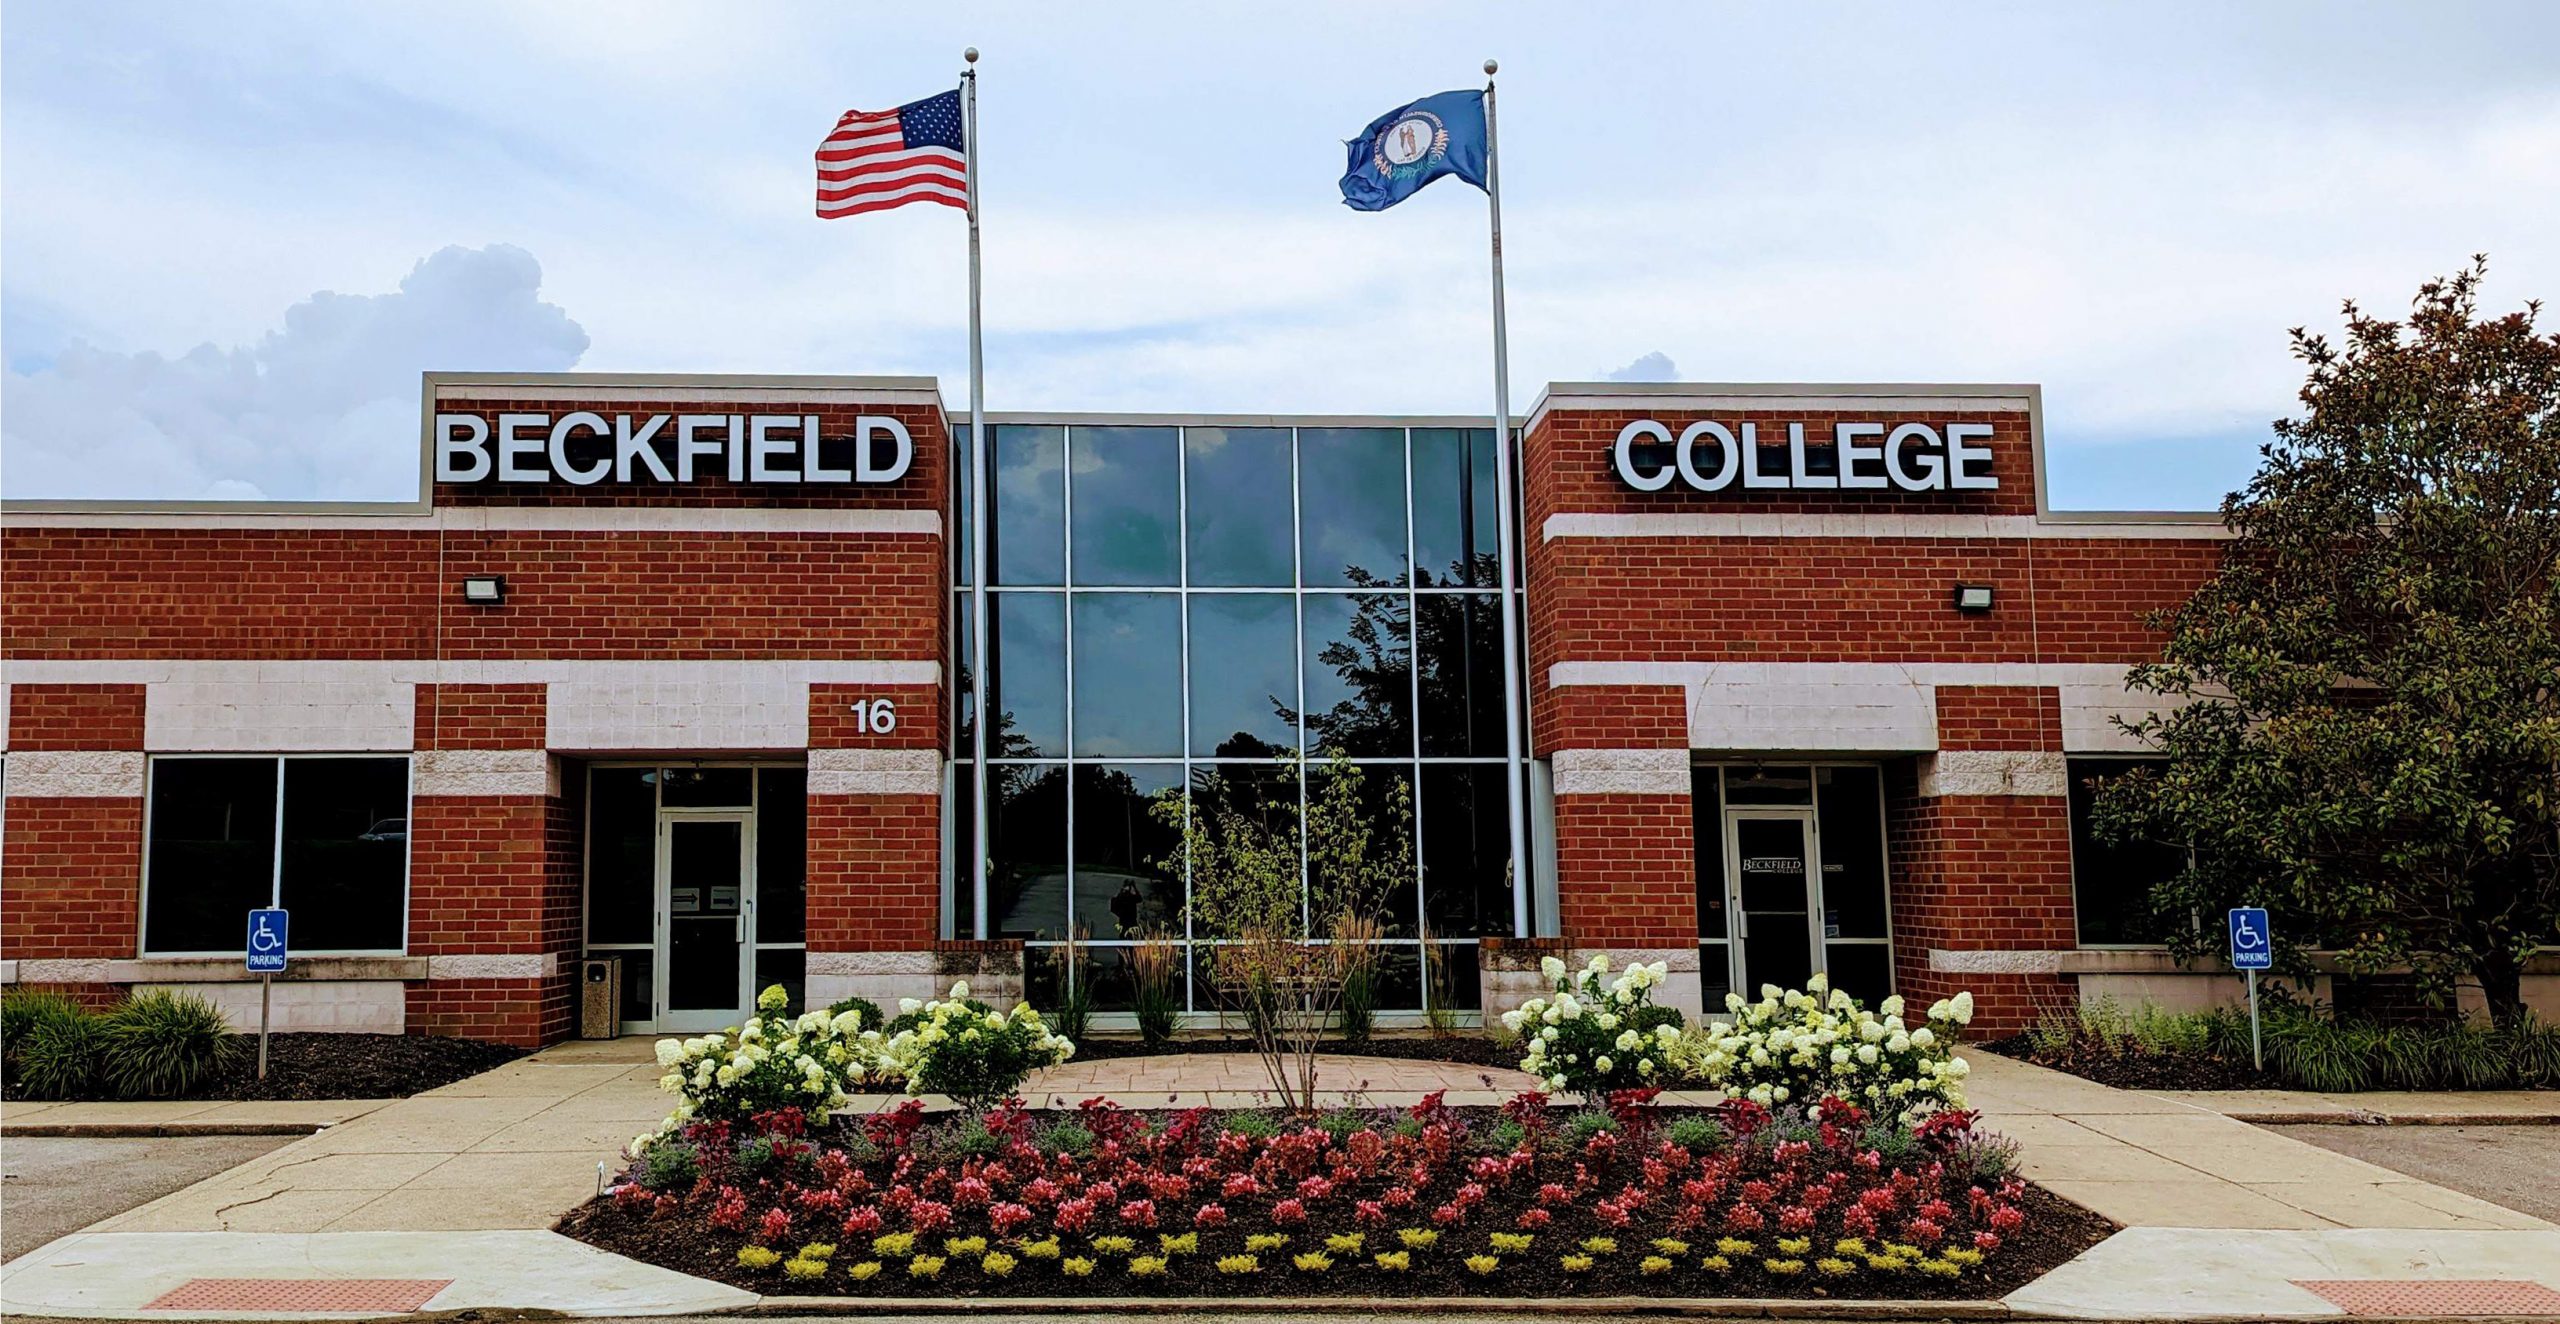 Beckfield College Building-